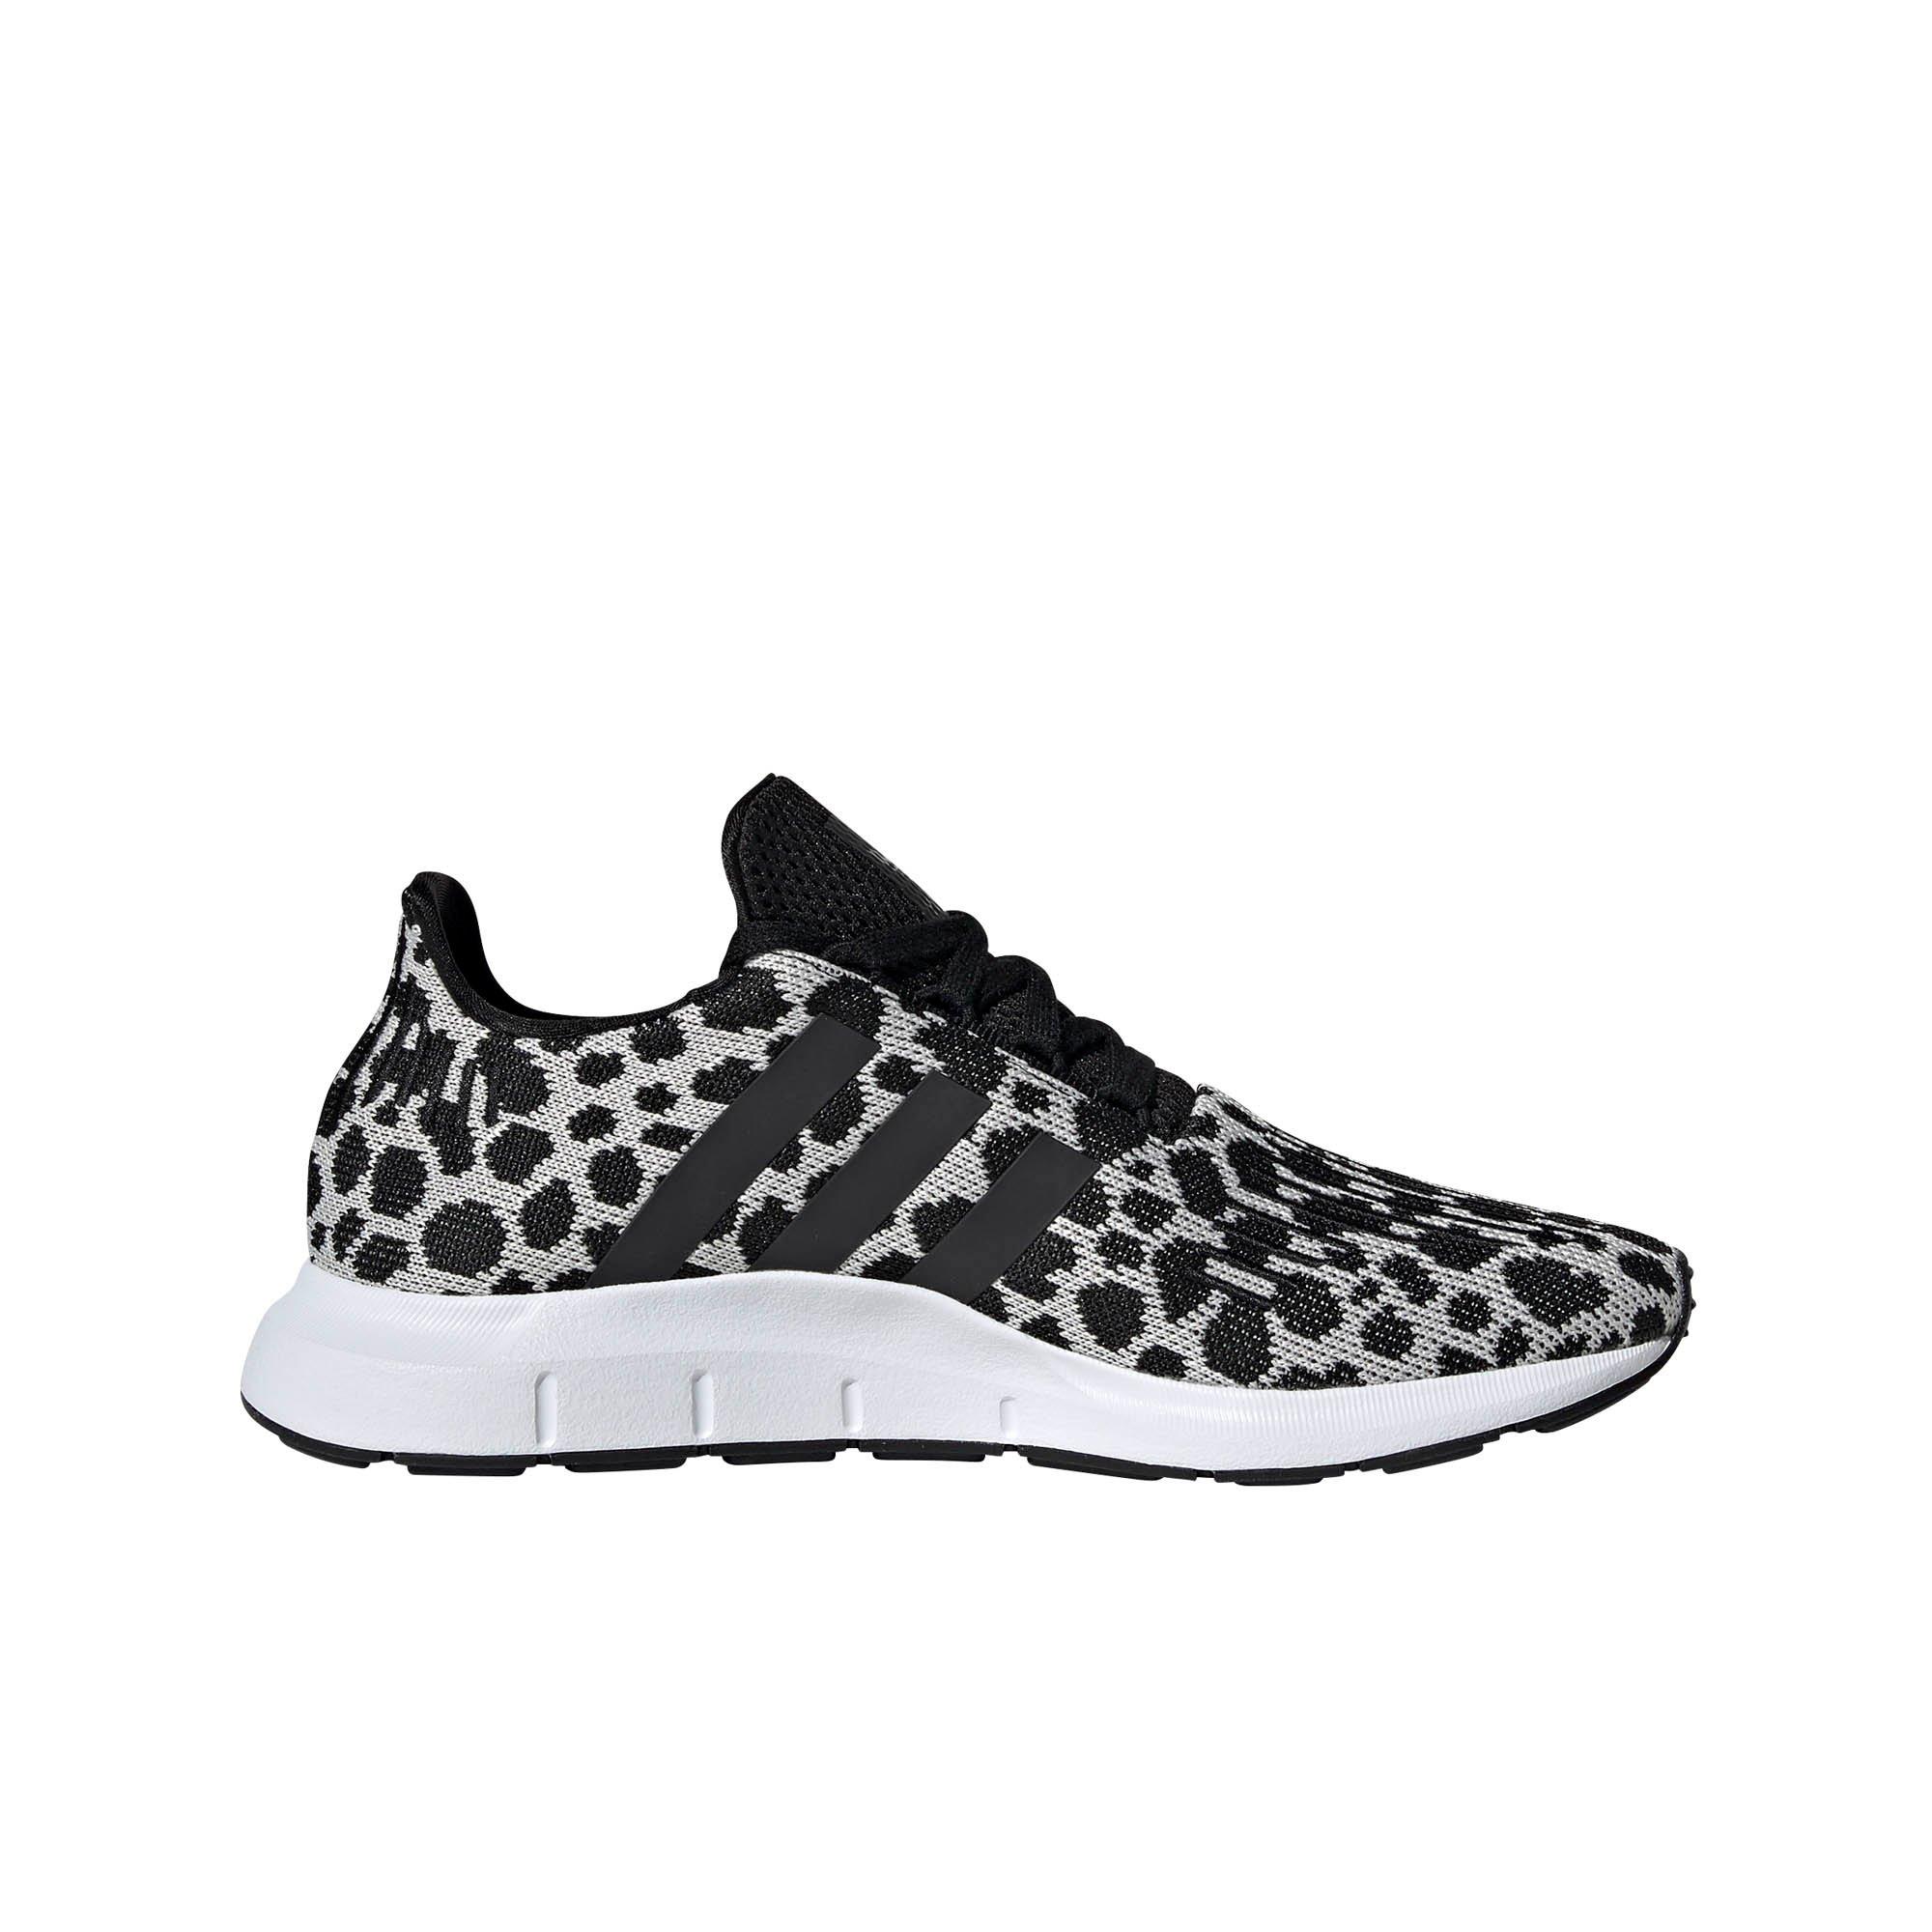 leopard adidas tennis shoes